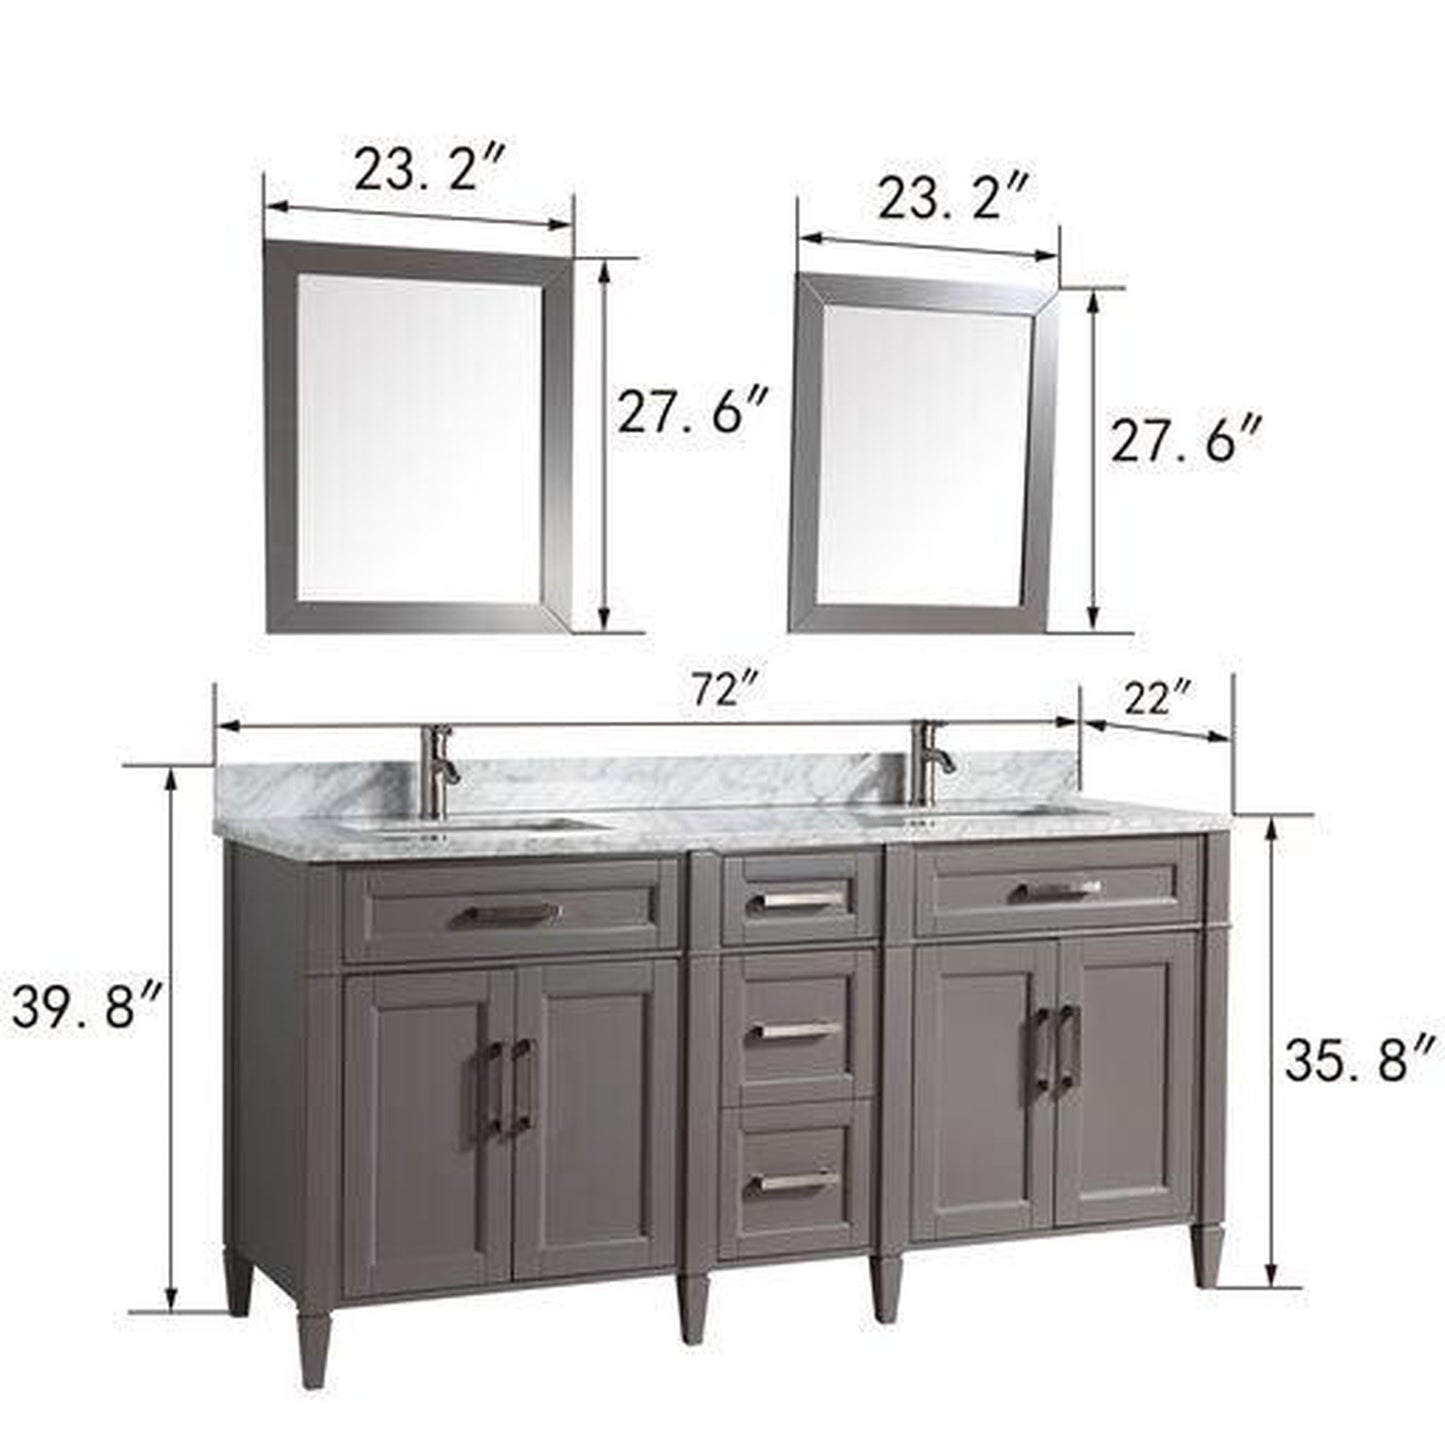 Vanity Art Savona 72" Double Espresso Freestanding Modern Bathroom Vanity Set With Carrara Marble Top, Undermount Ceramic Sink, 5 Dovetail Drawer Cabinet, Backsplash and 2 Mirrors